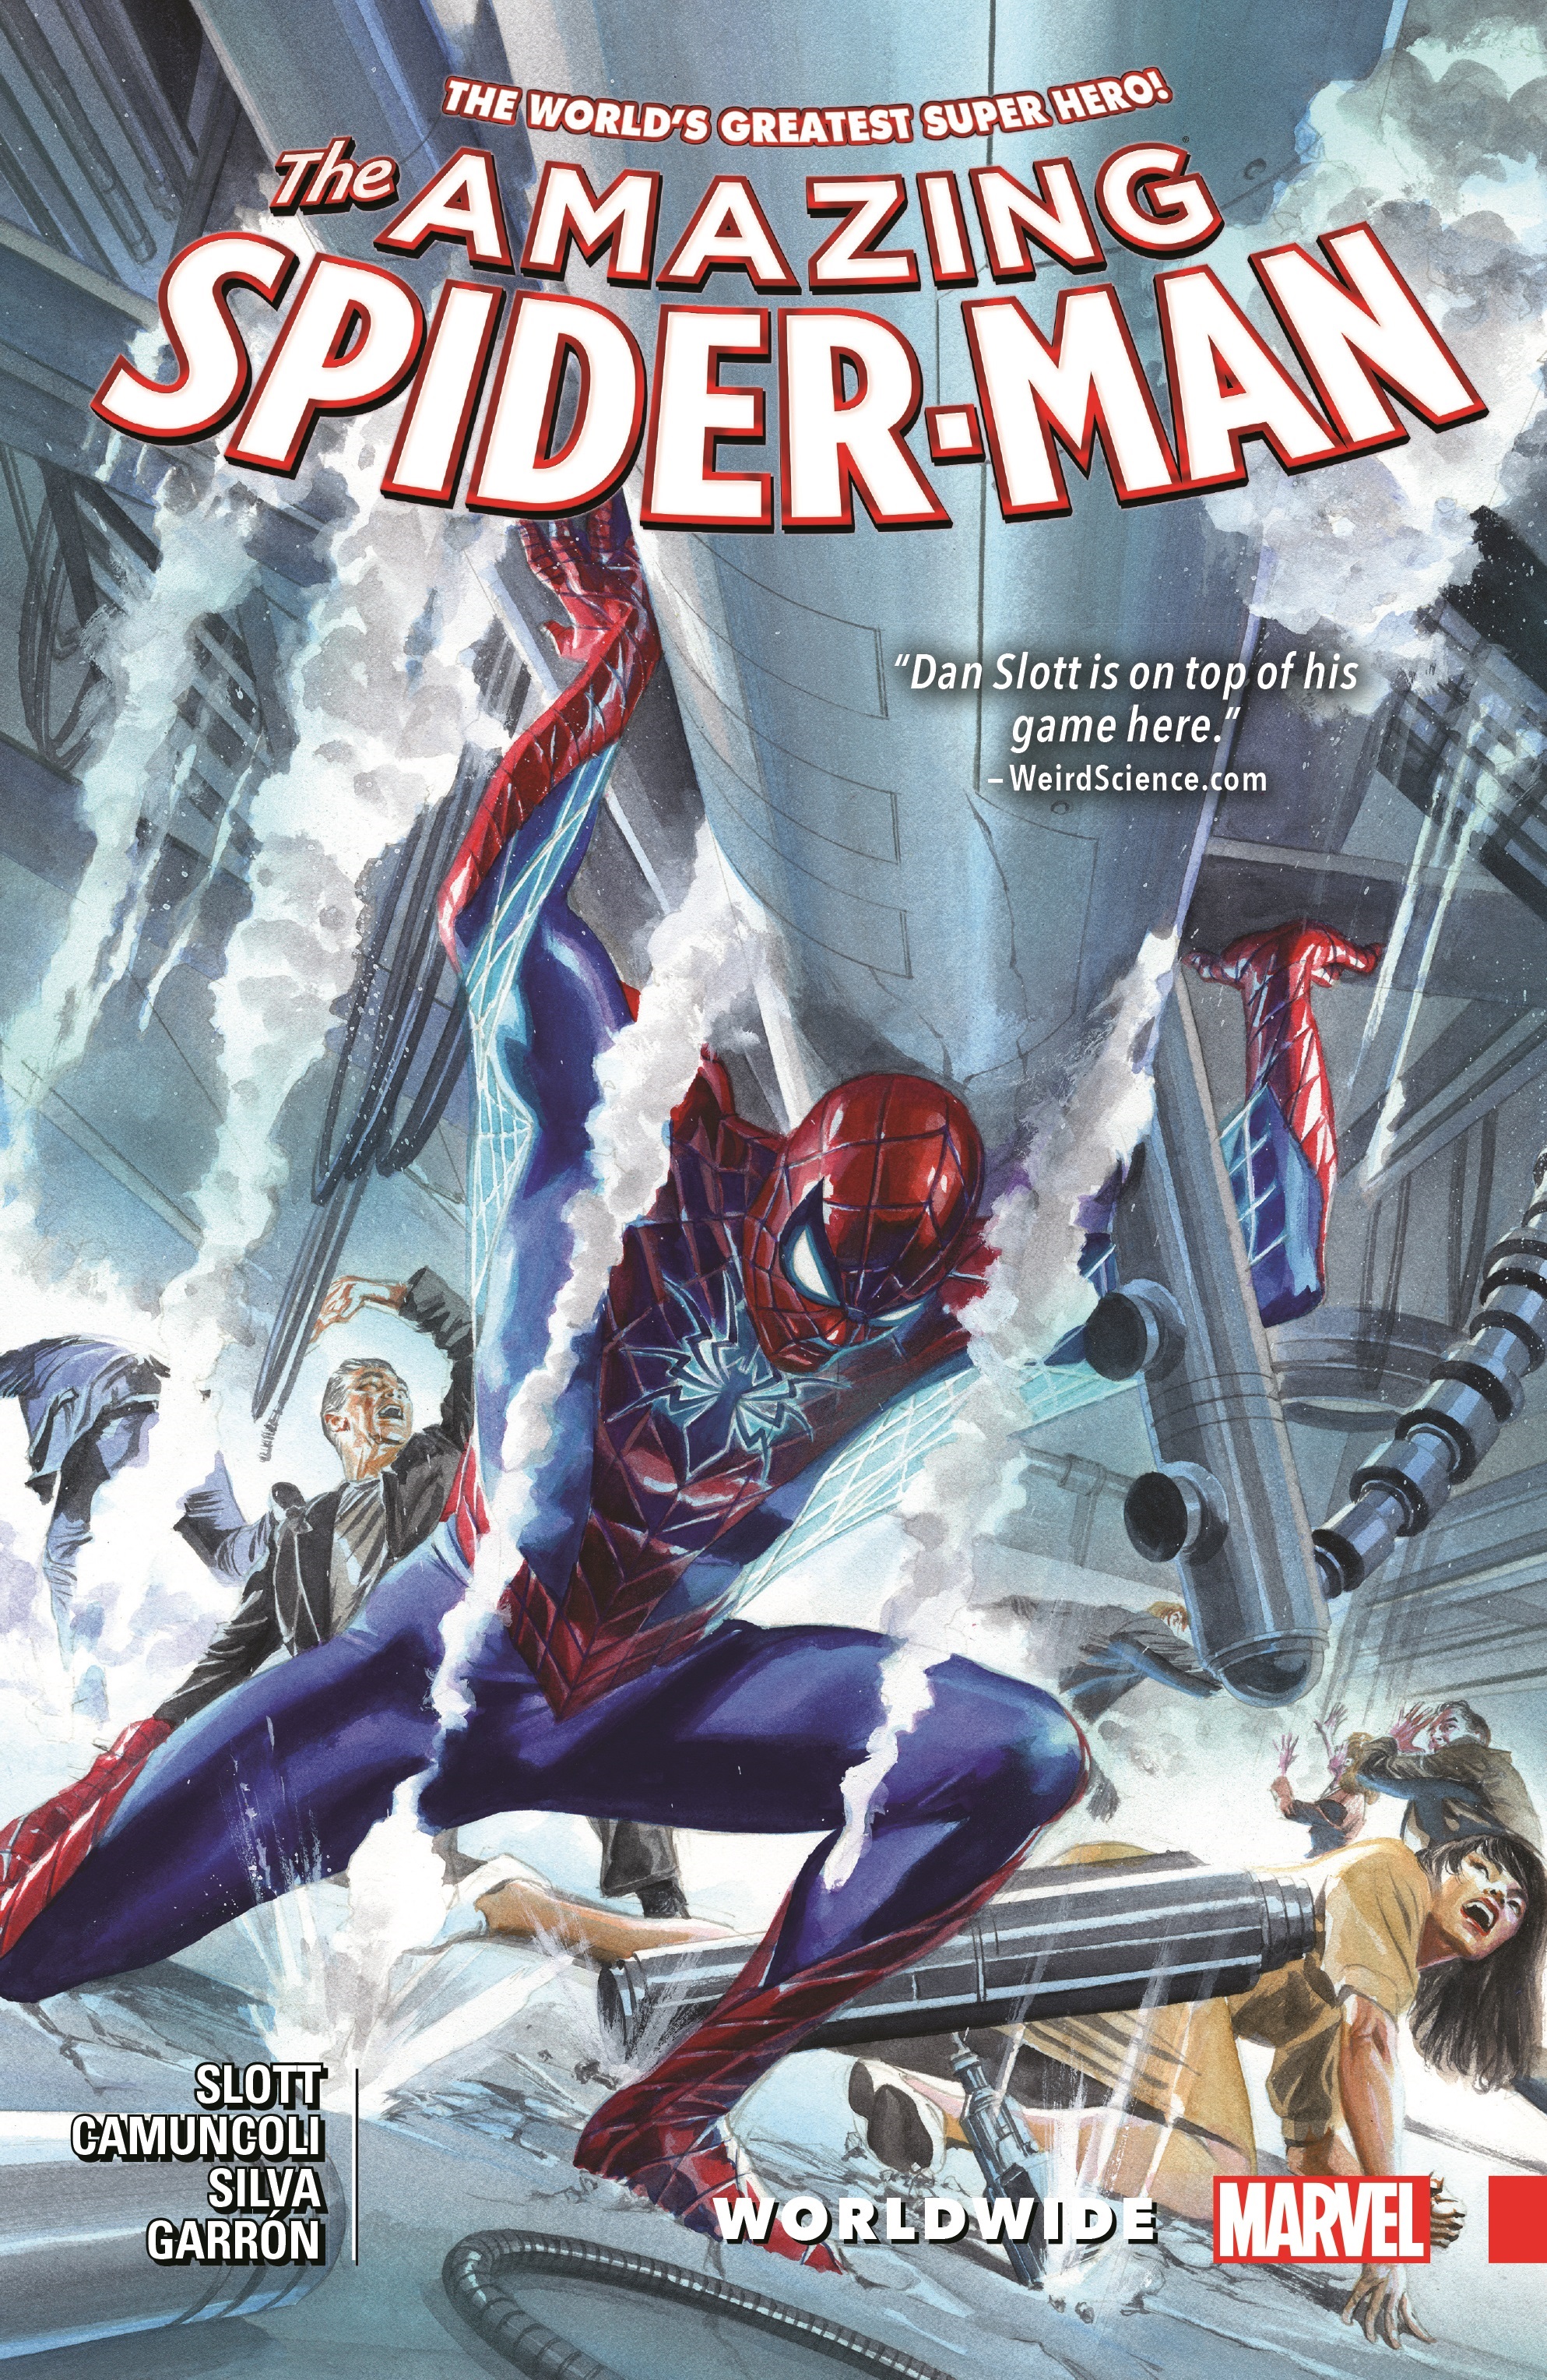 Amazing Spider-Man: Worldwide Vol. 4 (Trade Paperback)